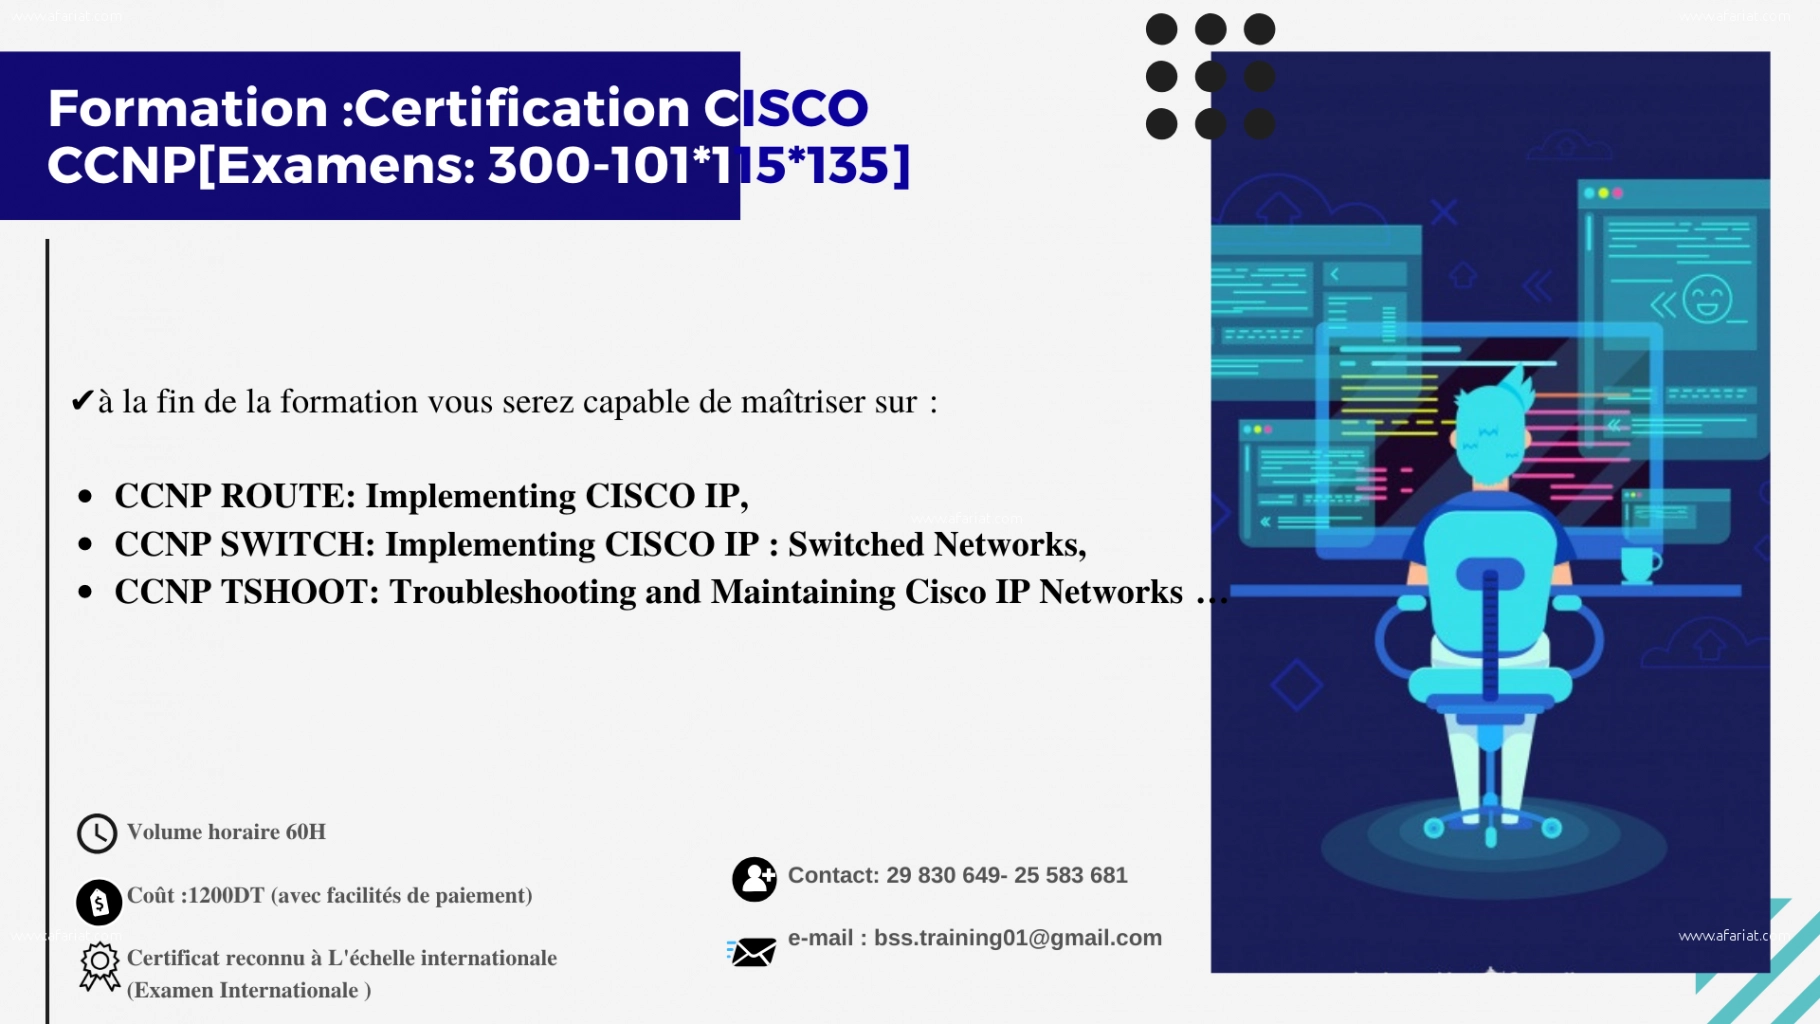 Formation et Certification CISCO CCNP